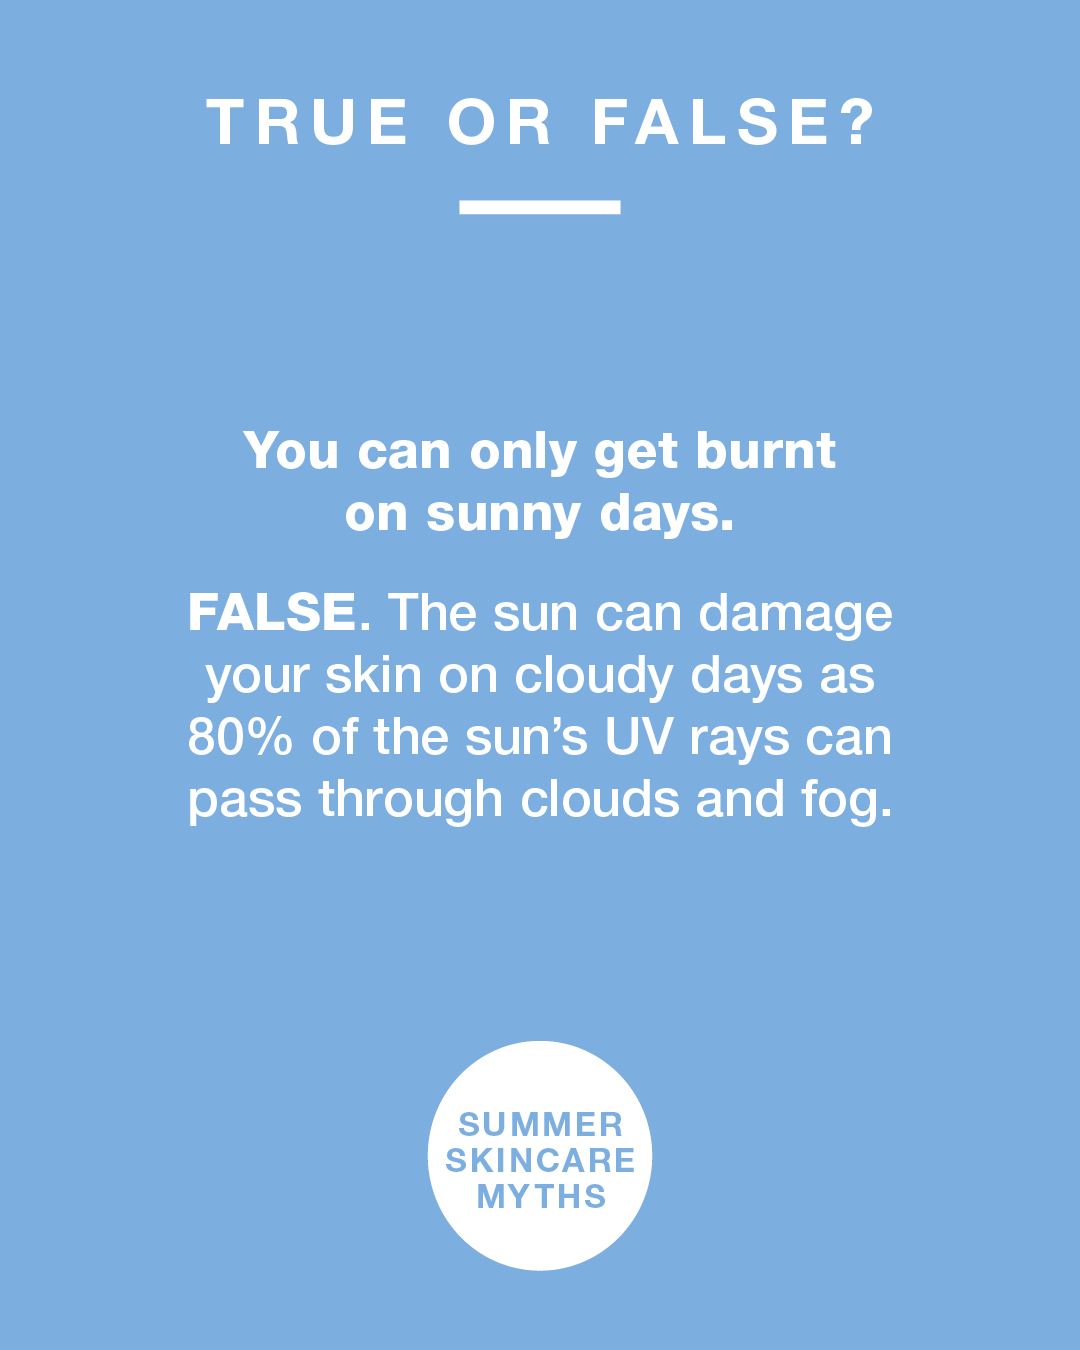 Summer skincare facts true or false. You can only get sunburnt on sunny days. False.